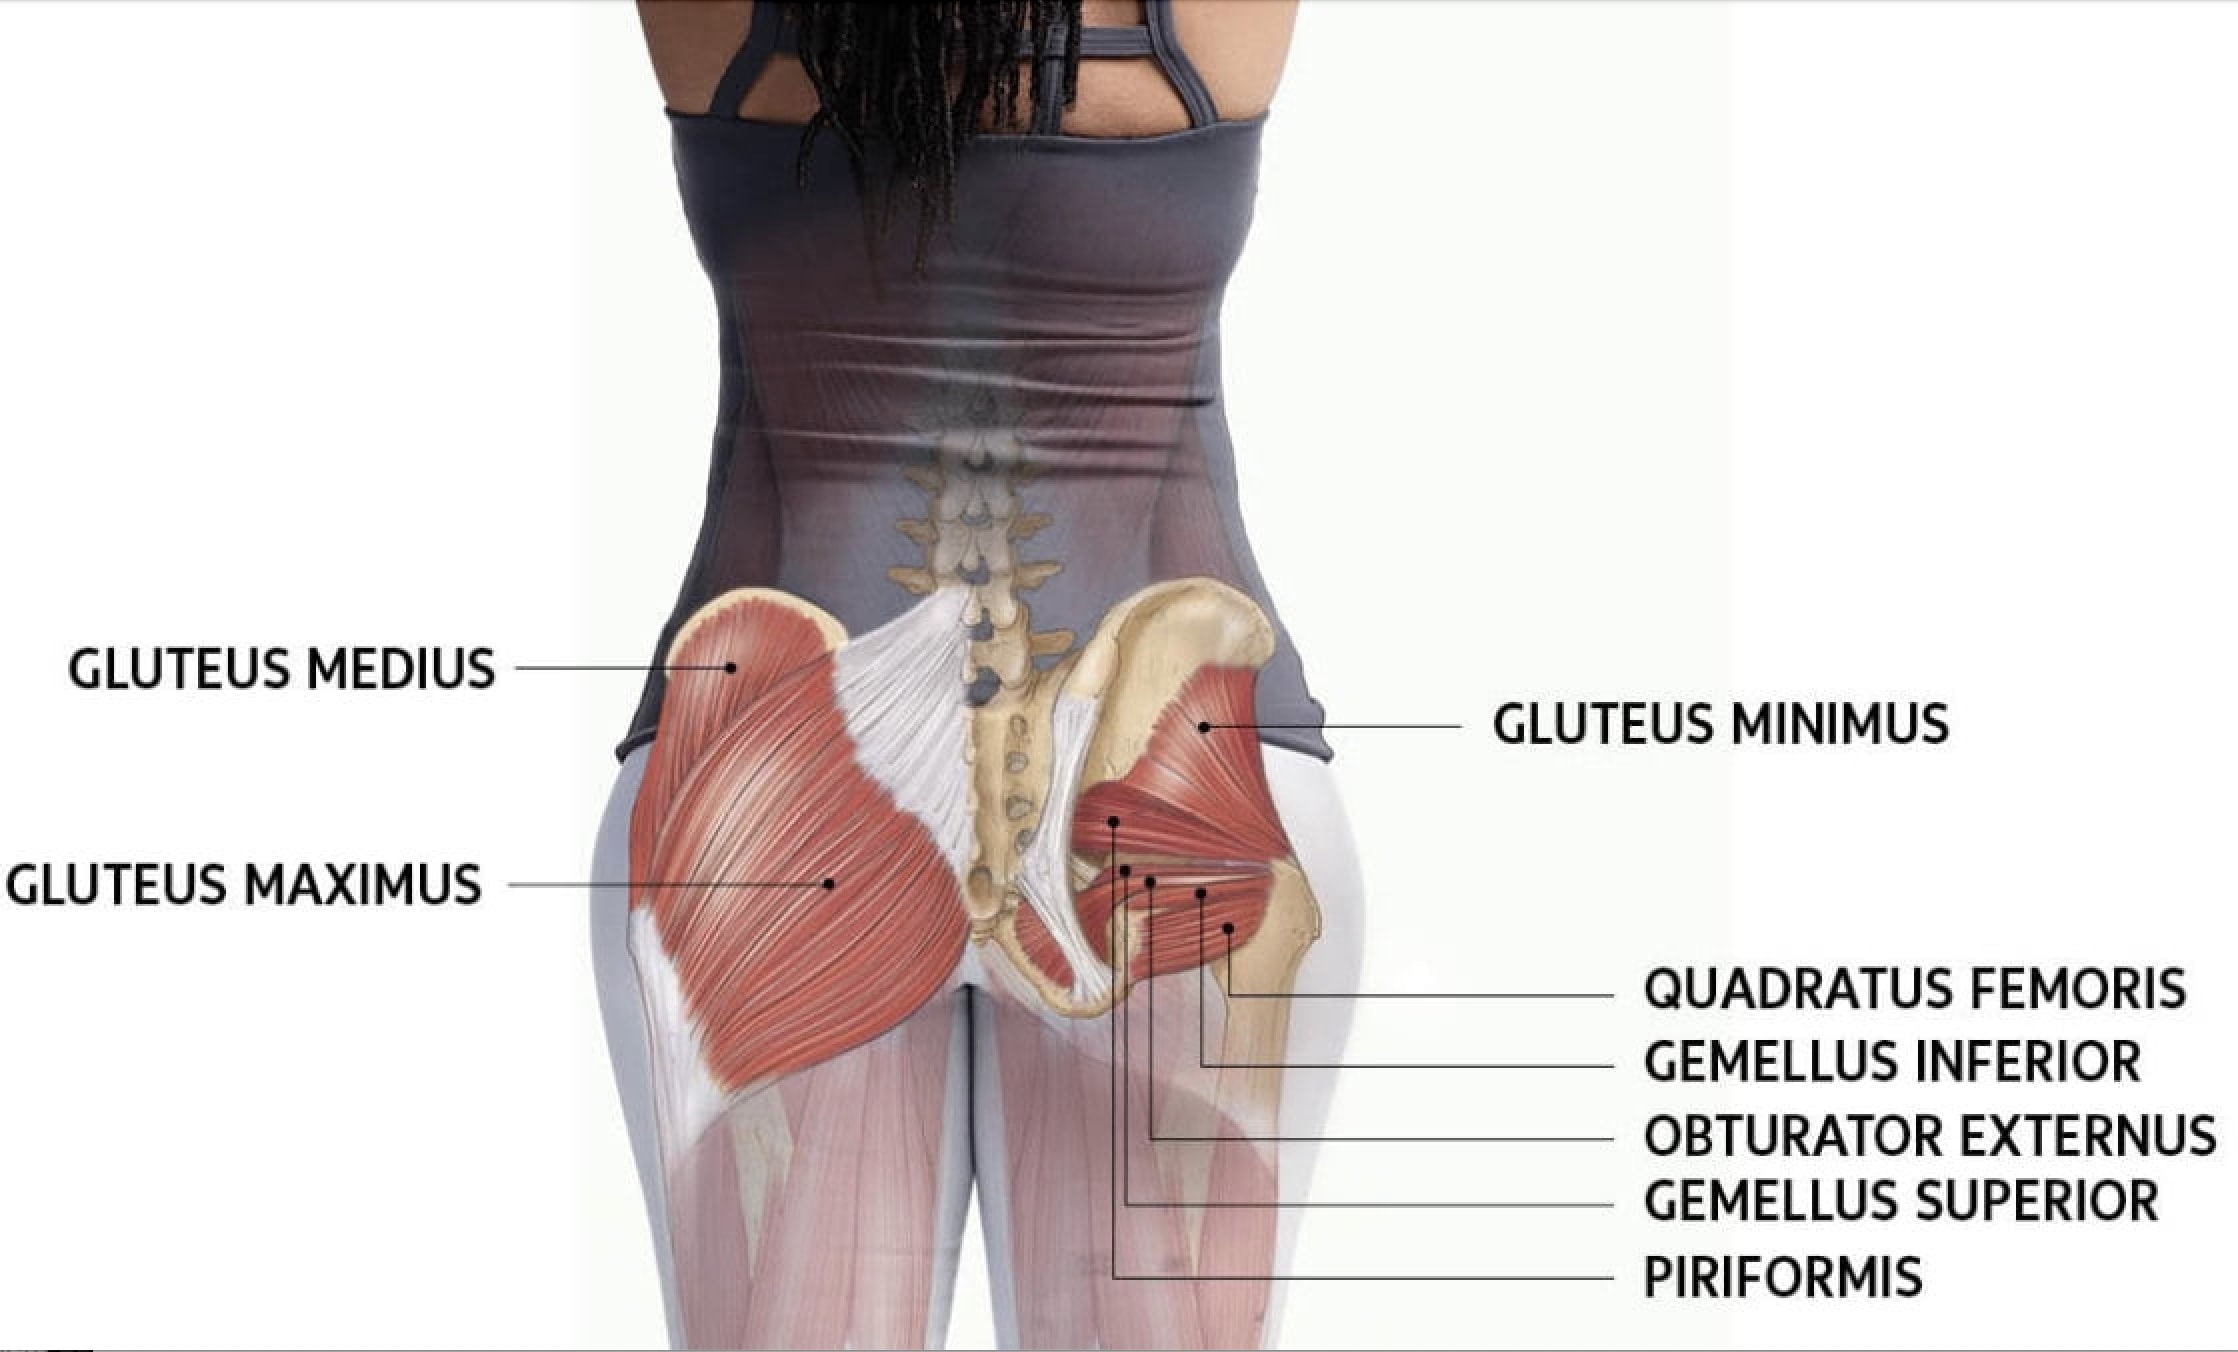 Glute activation anatomy